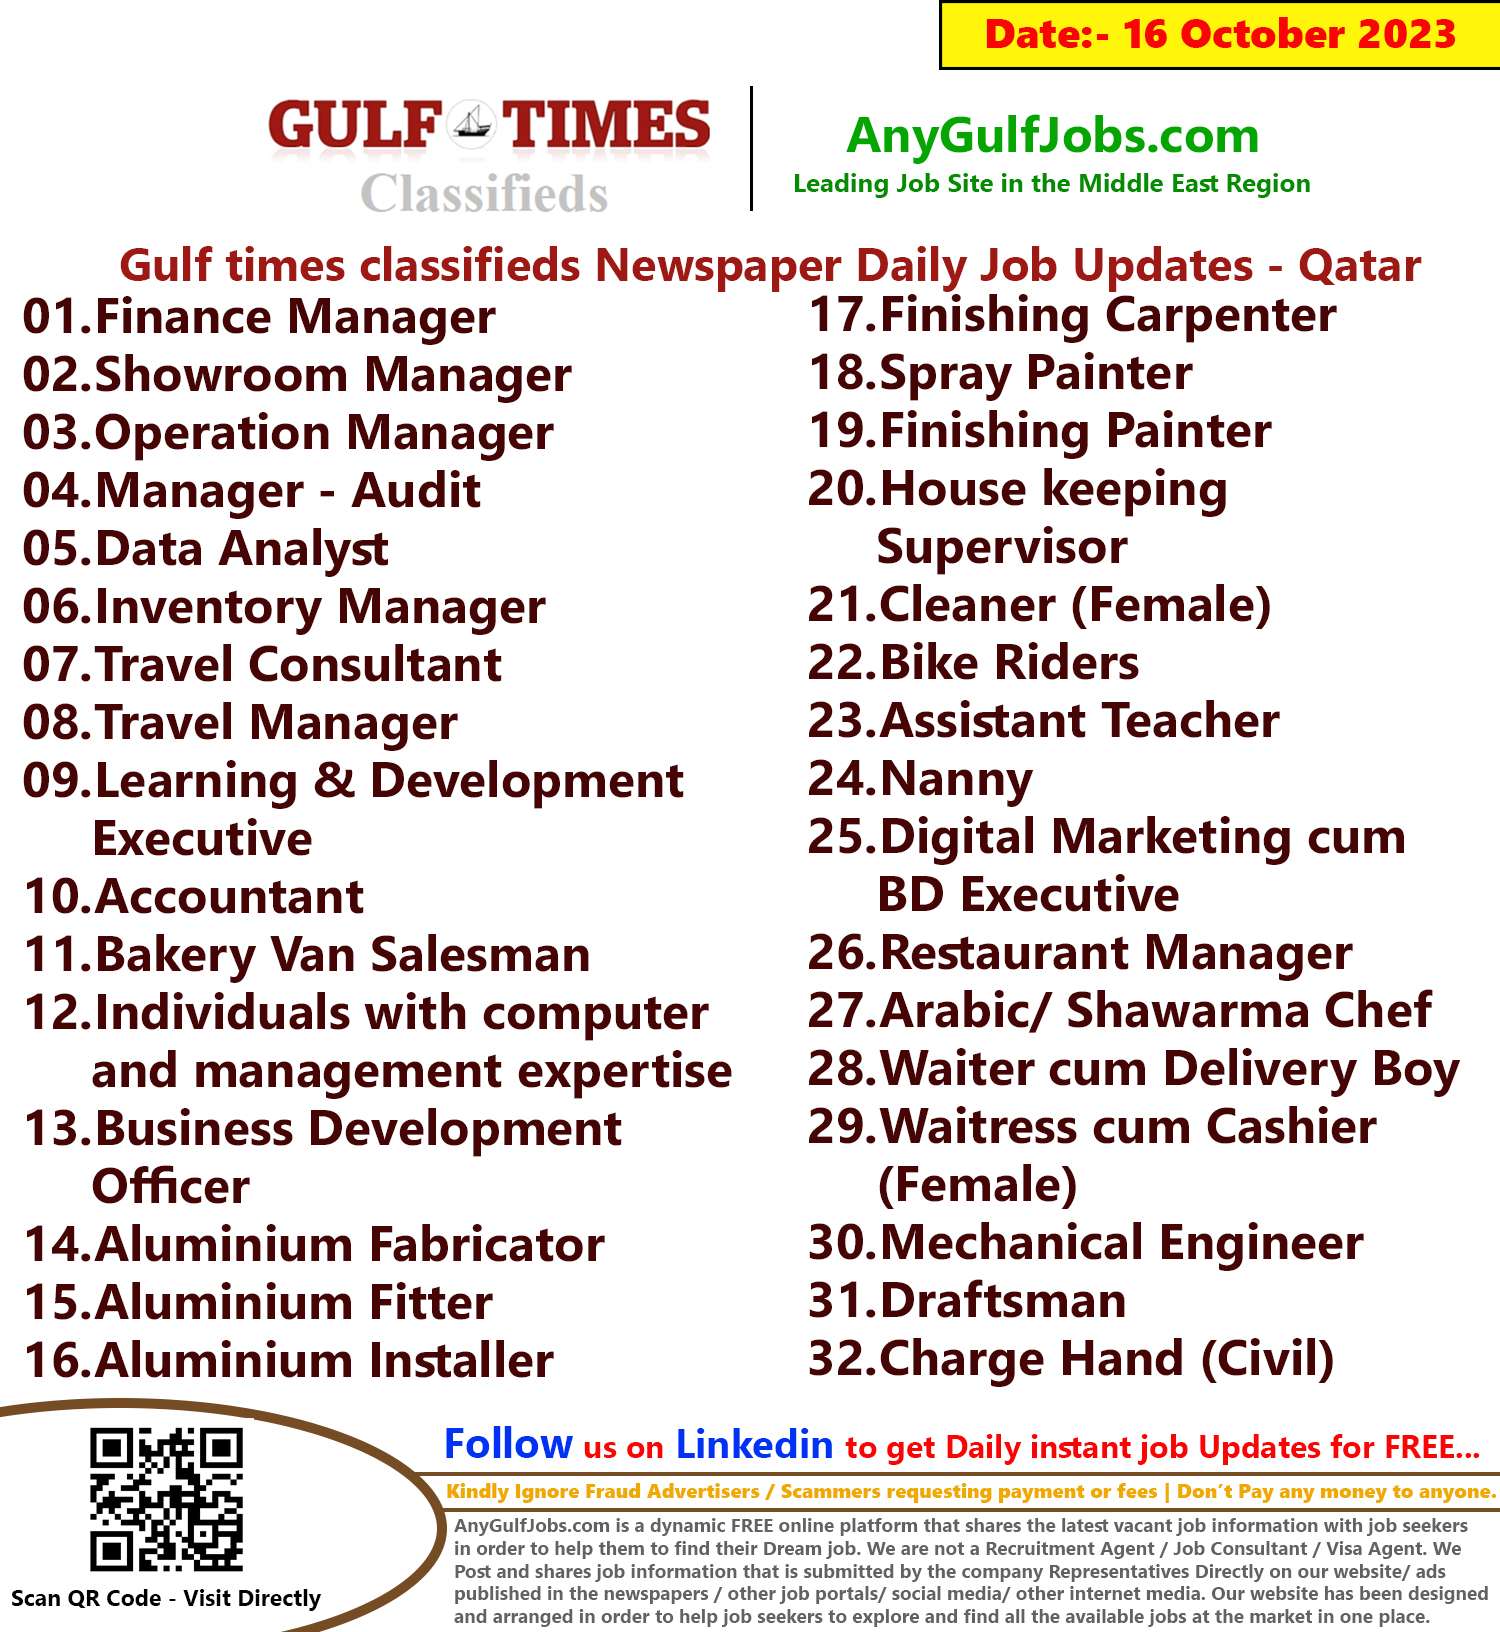 Gulf times classifieds Job Vacancies Qatar - 16 October 2023